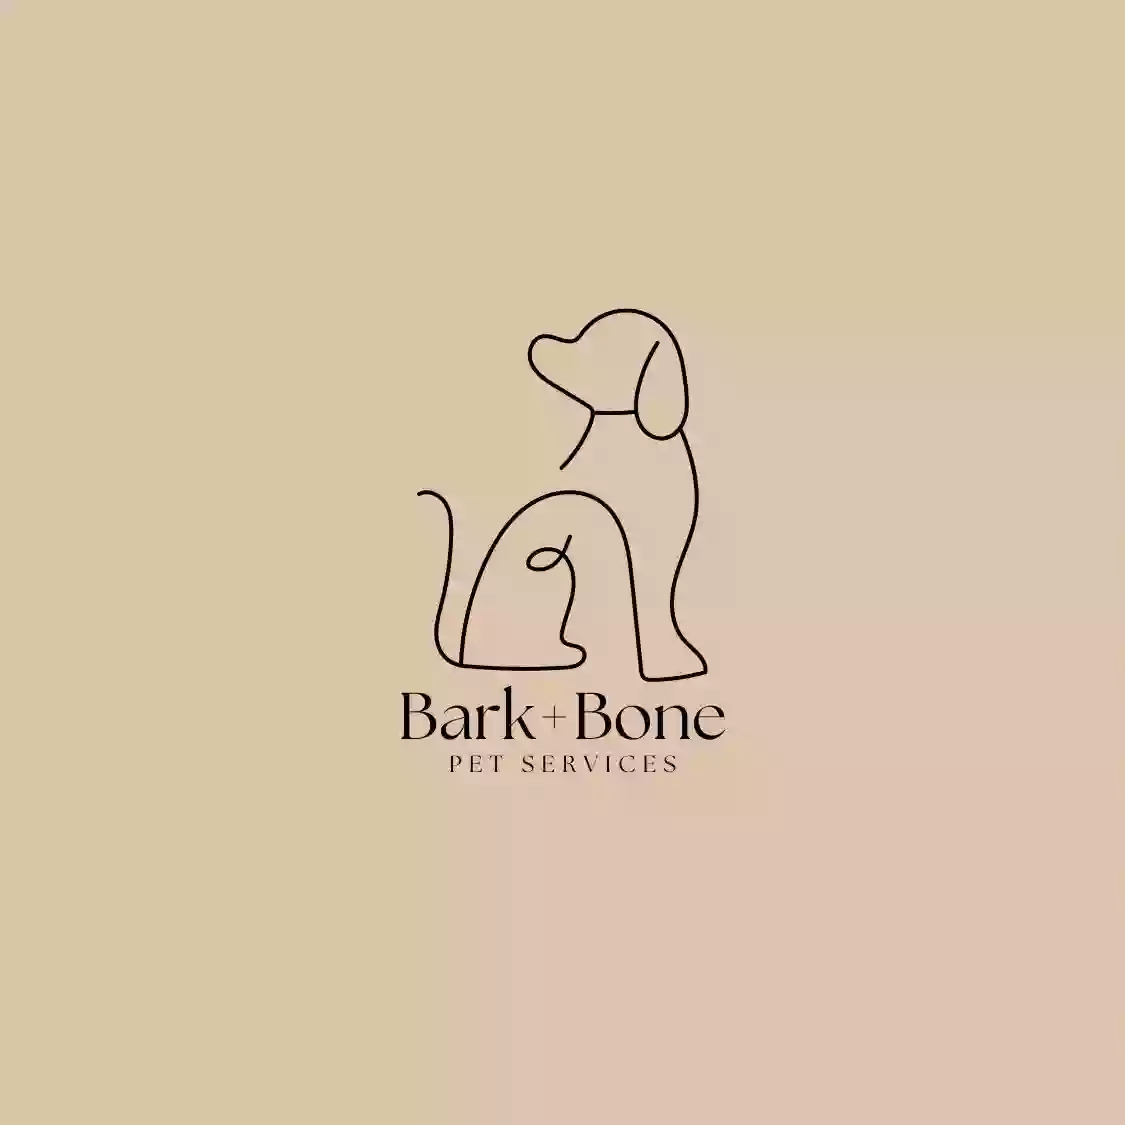 Bark+Bone Pet Services